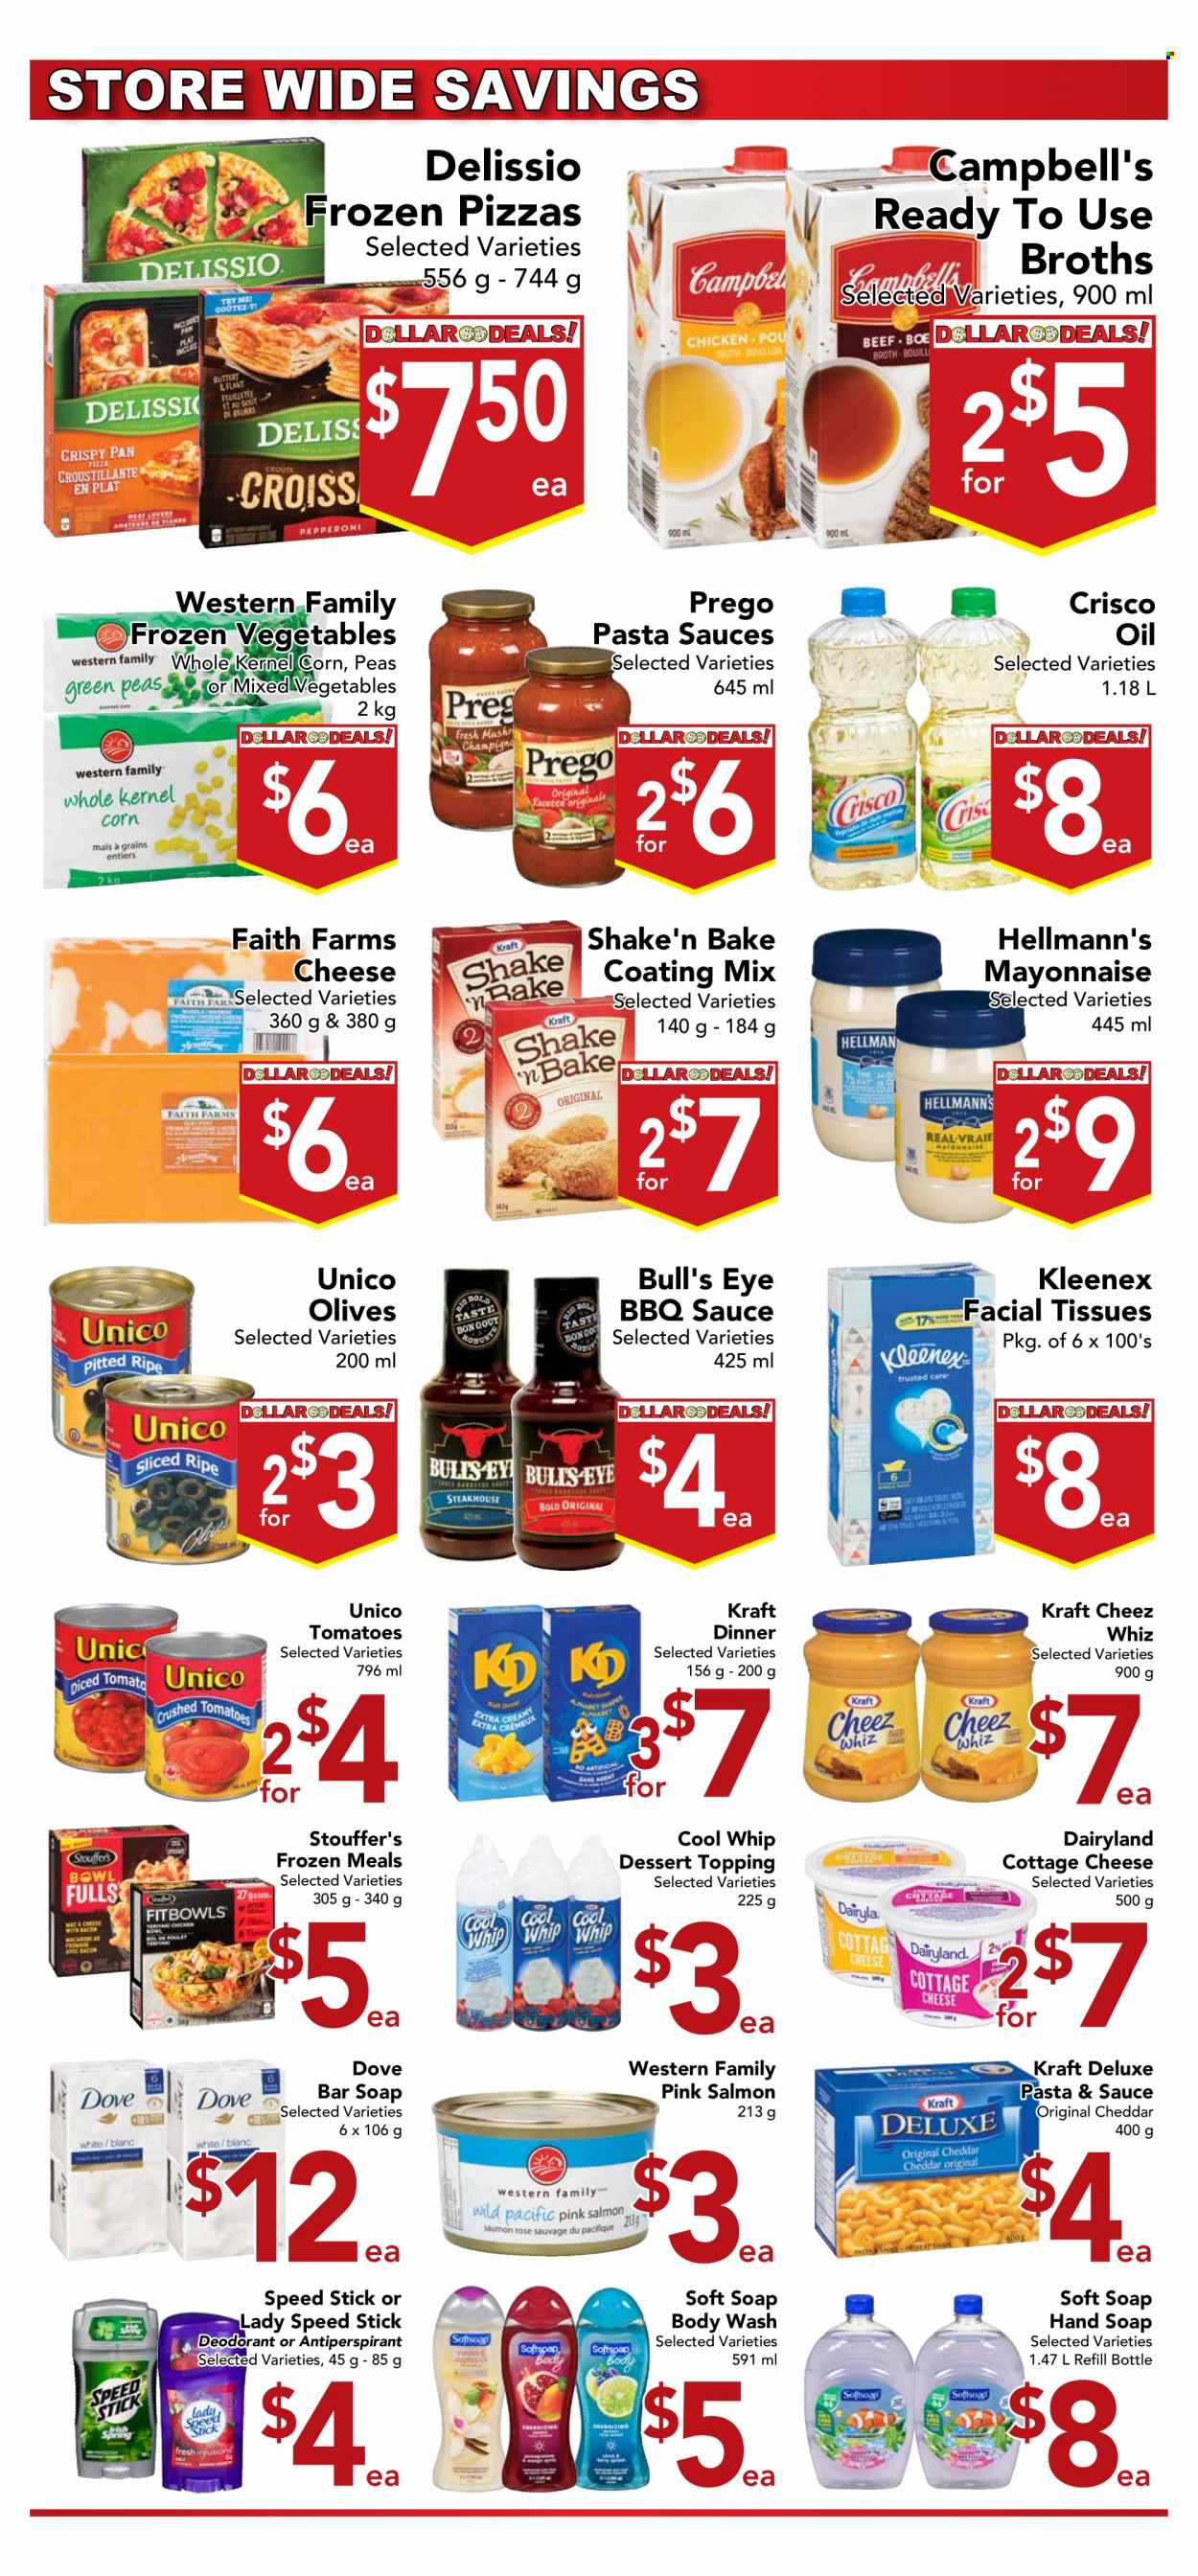 Buy-Low Foods flyer  - November 27, 2022 - December 03, 2022.